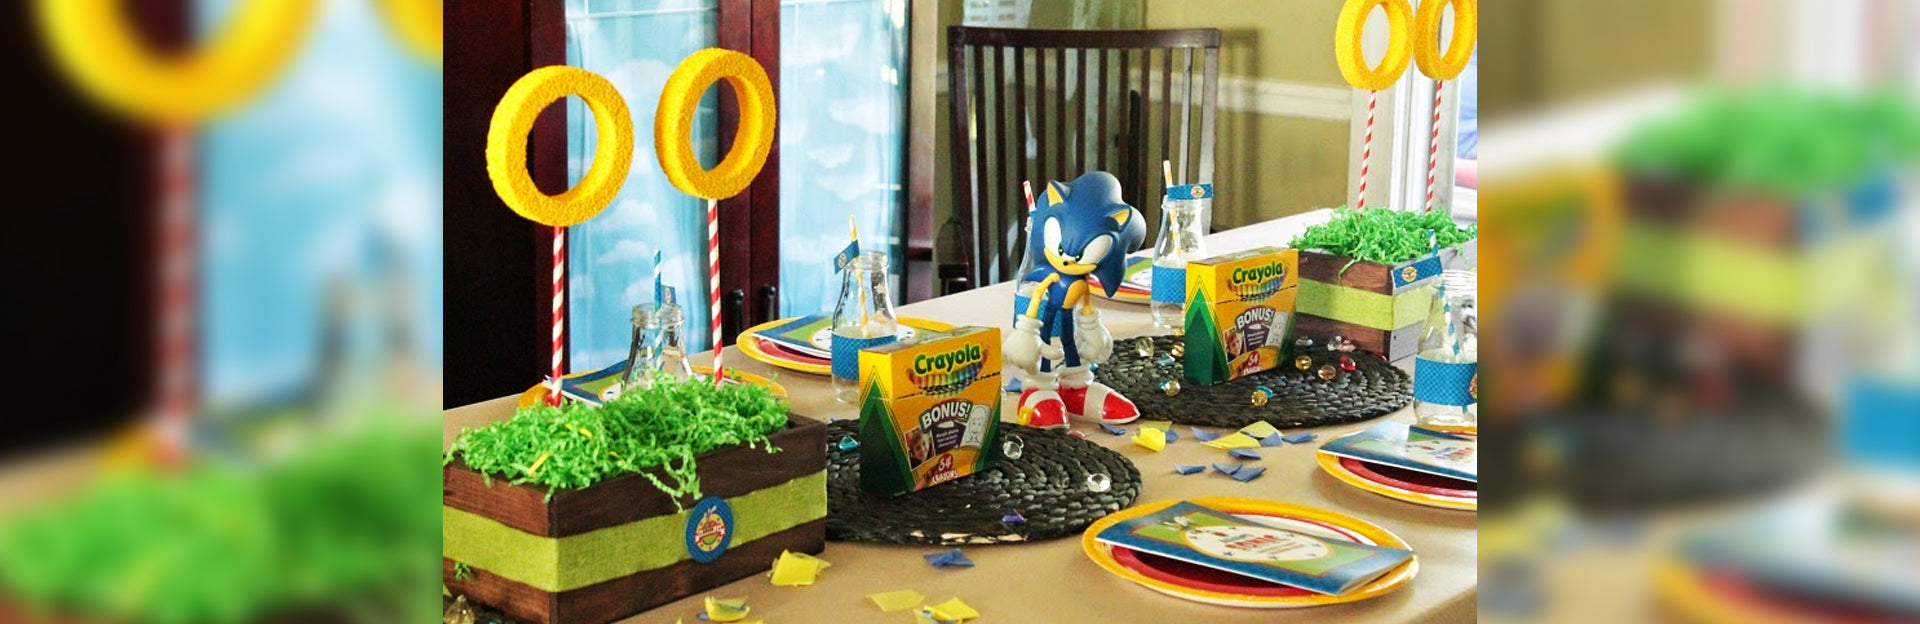 Sonic Hedgehog Theme Birthday Invitation